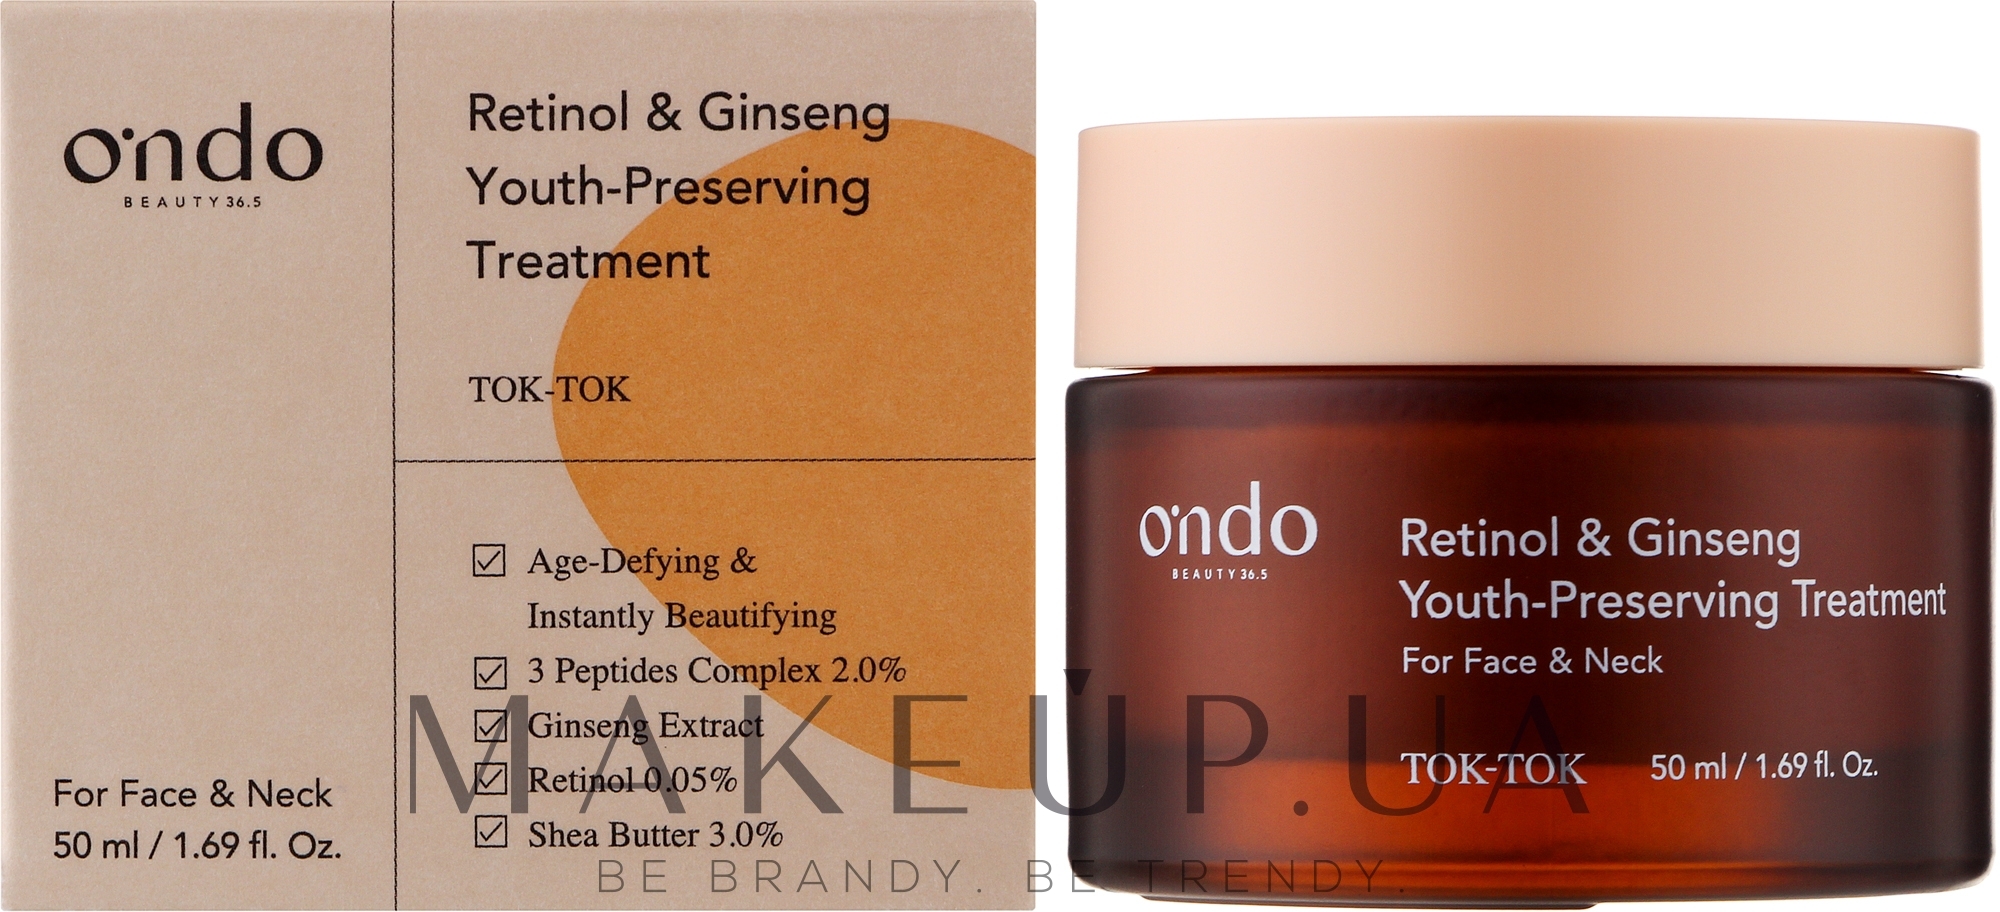 Підтягувальний крем для шиї та зони декольте  - Ondo Beauty 36.5 Peptides & Ginseng Neck Treatment — фото 50ml